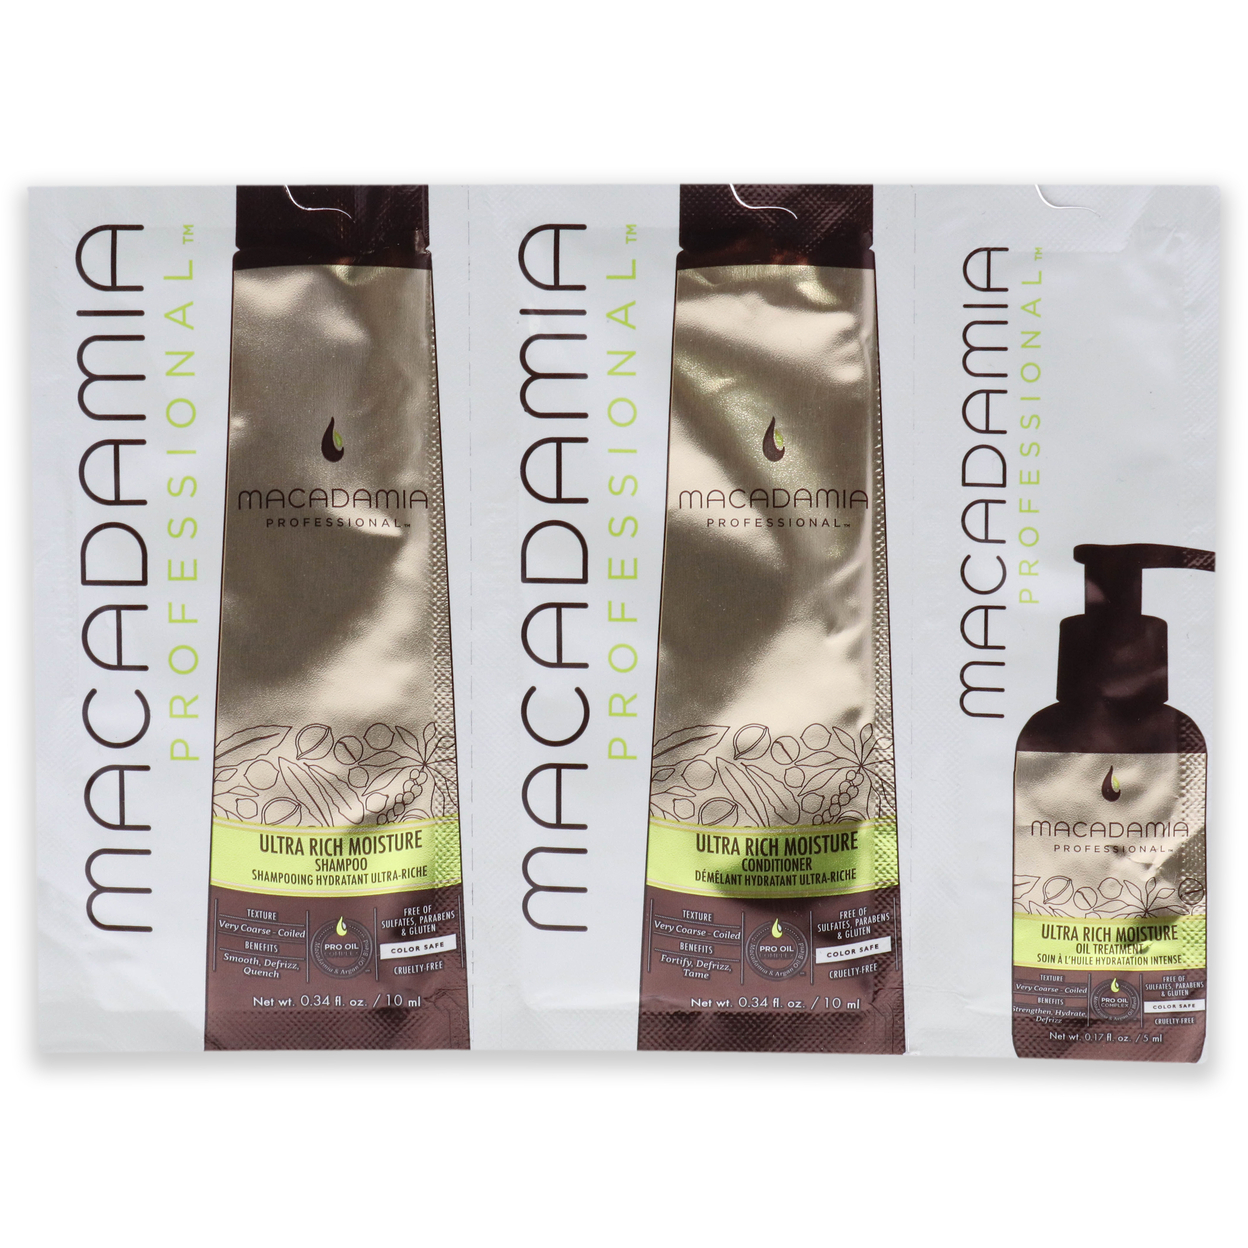 Macadamia Oil Professional Ultra Rich Moisture Set 0.34oz Shampoo, 0.34oz Conditioner, 0.17oz Oil Treatment 3 Pc Kit